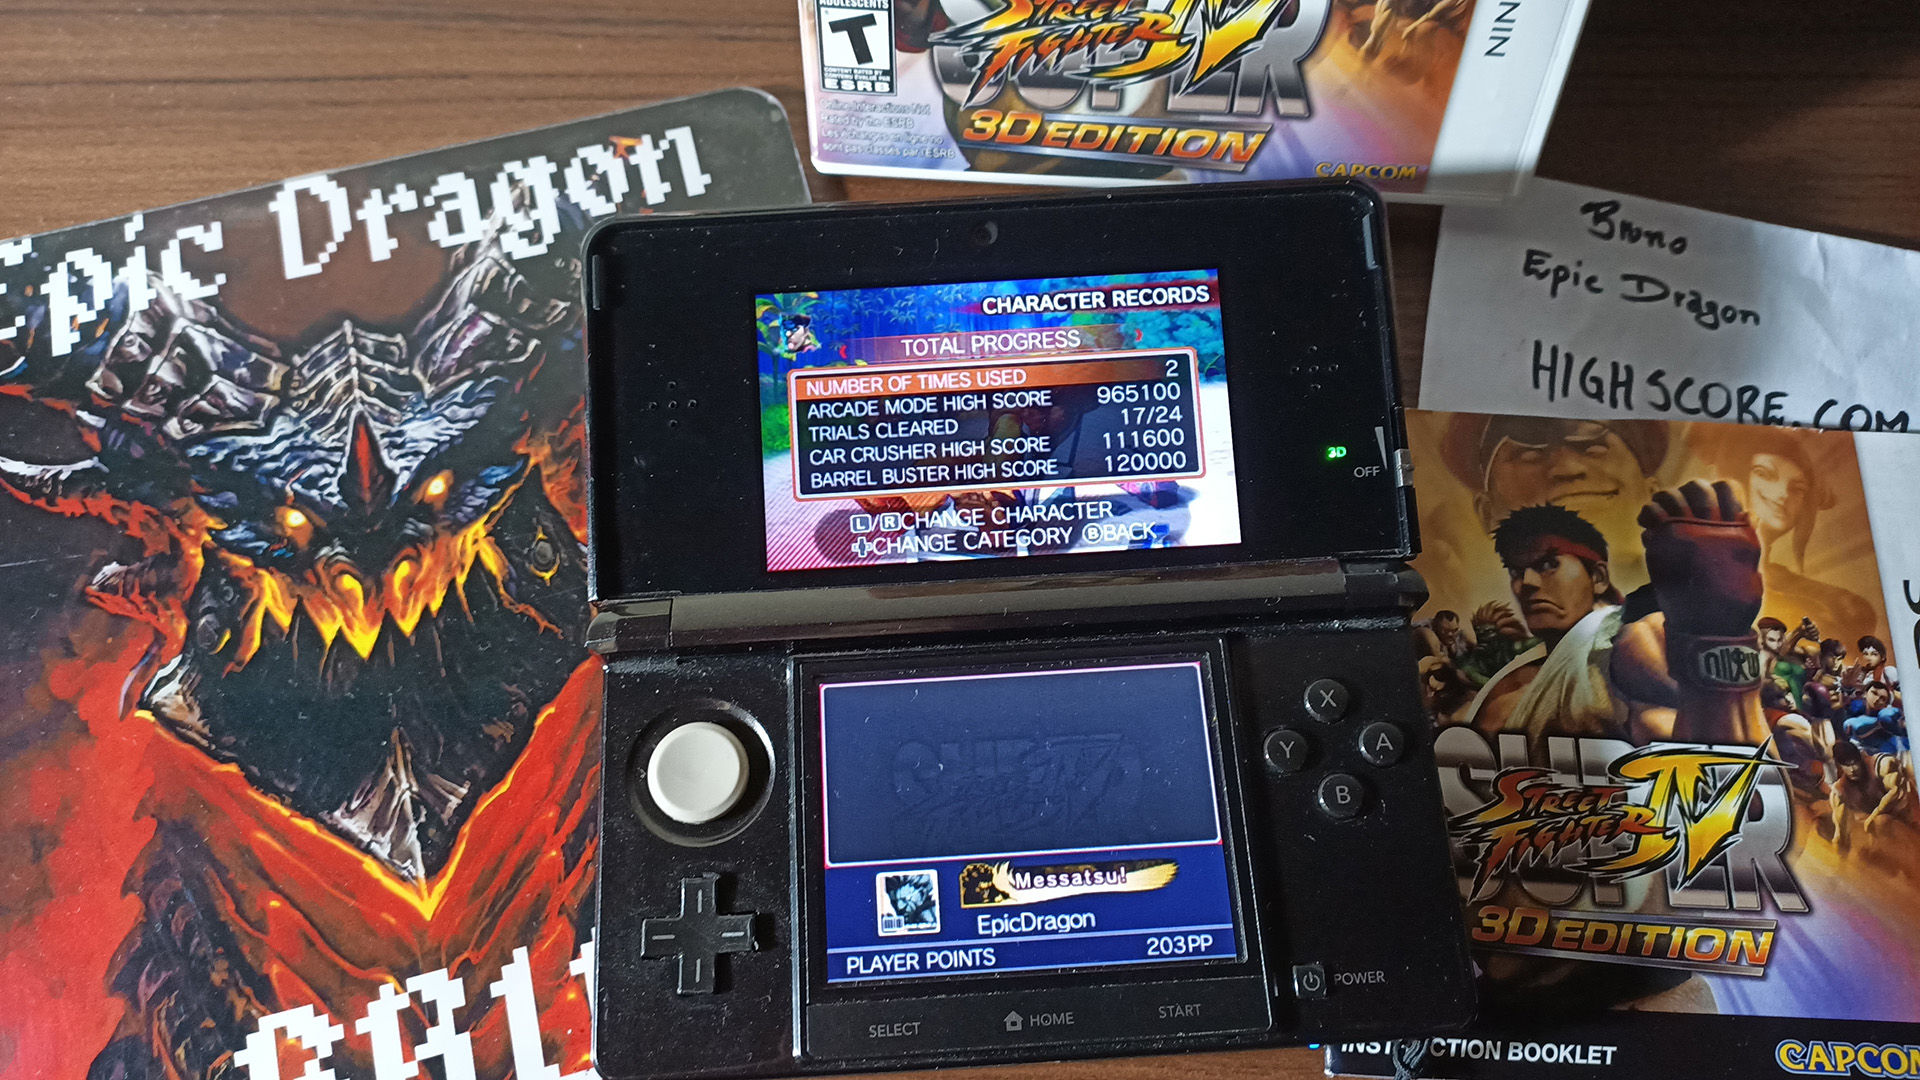 EpicDragon: Super Street Fighter IV 3D Edition: Arcade: M. Bison [Vega in Japanese Version] (Nintendo 3DS) 965,100 points on 2022-08-11 17:30:48